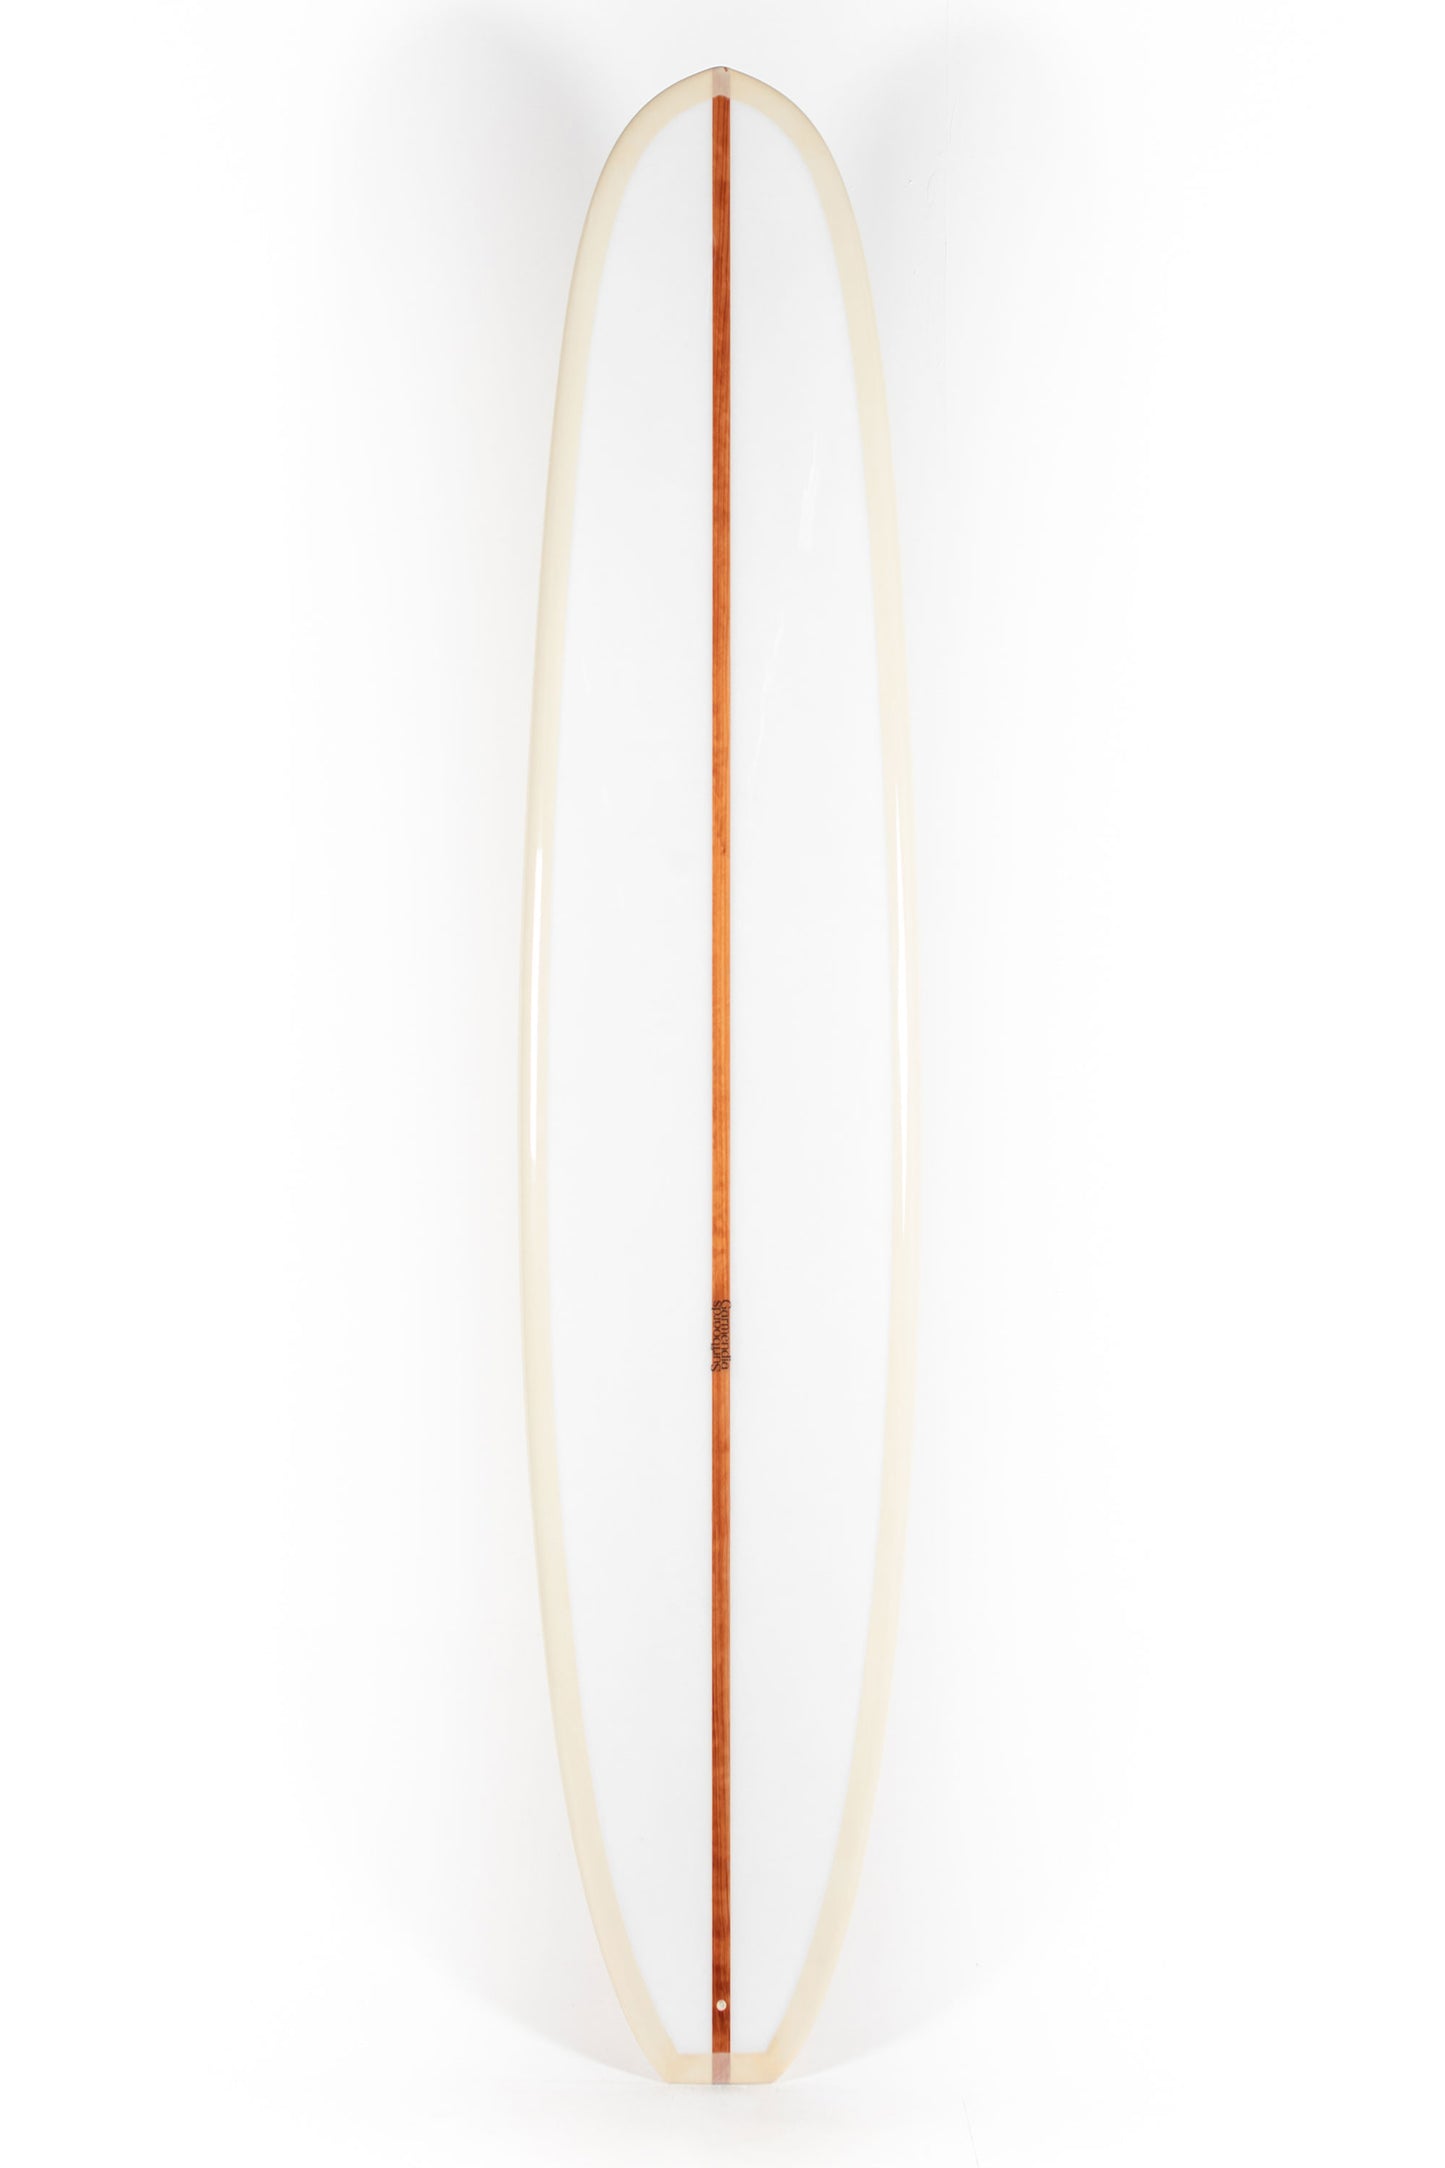 Pukas Surf Shop - Garmendia Surfboards - BULLET - 9'6" x 23 x 3 - Ref. BULLET96